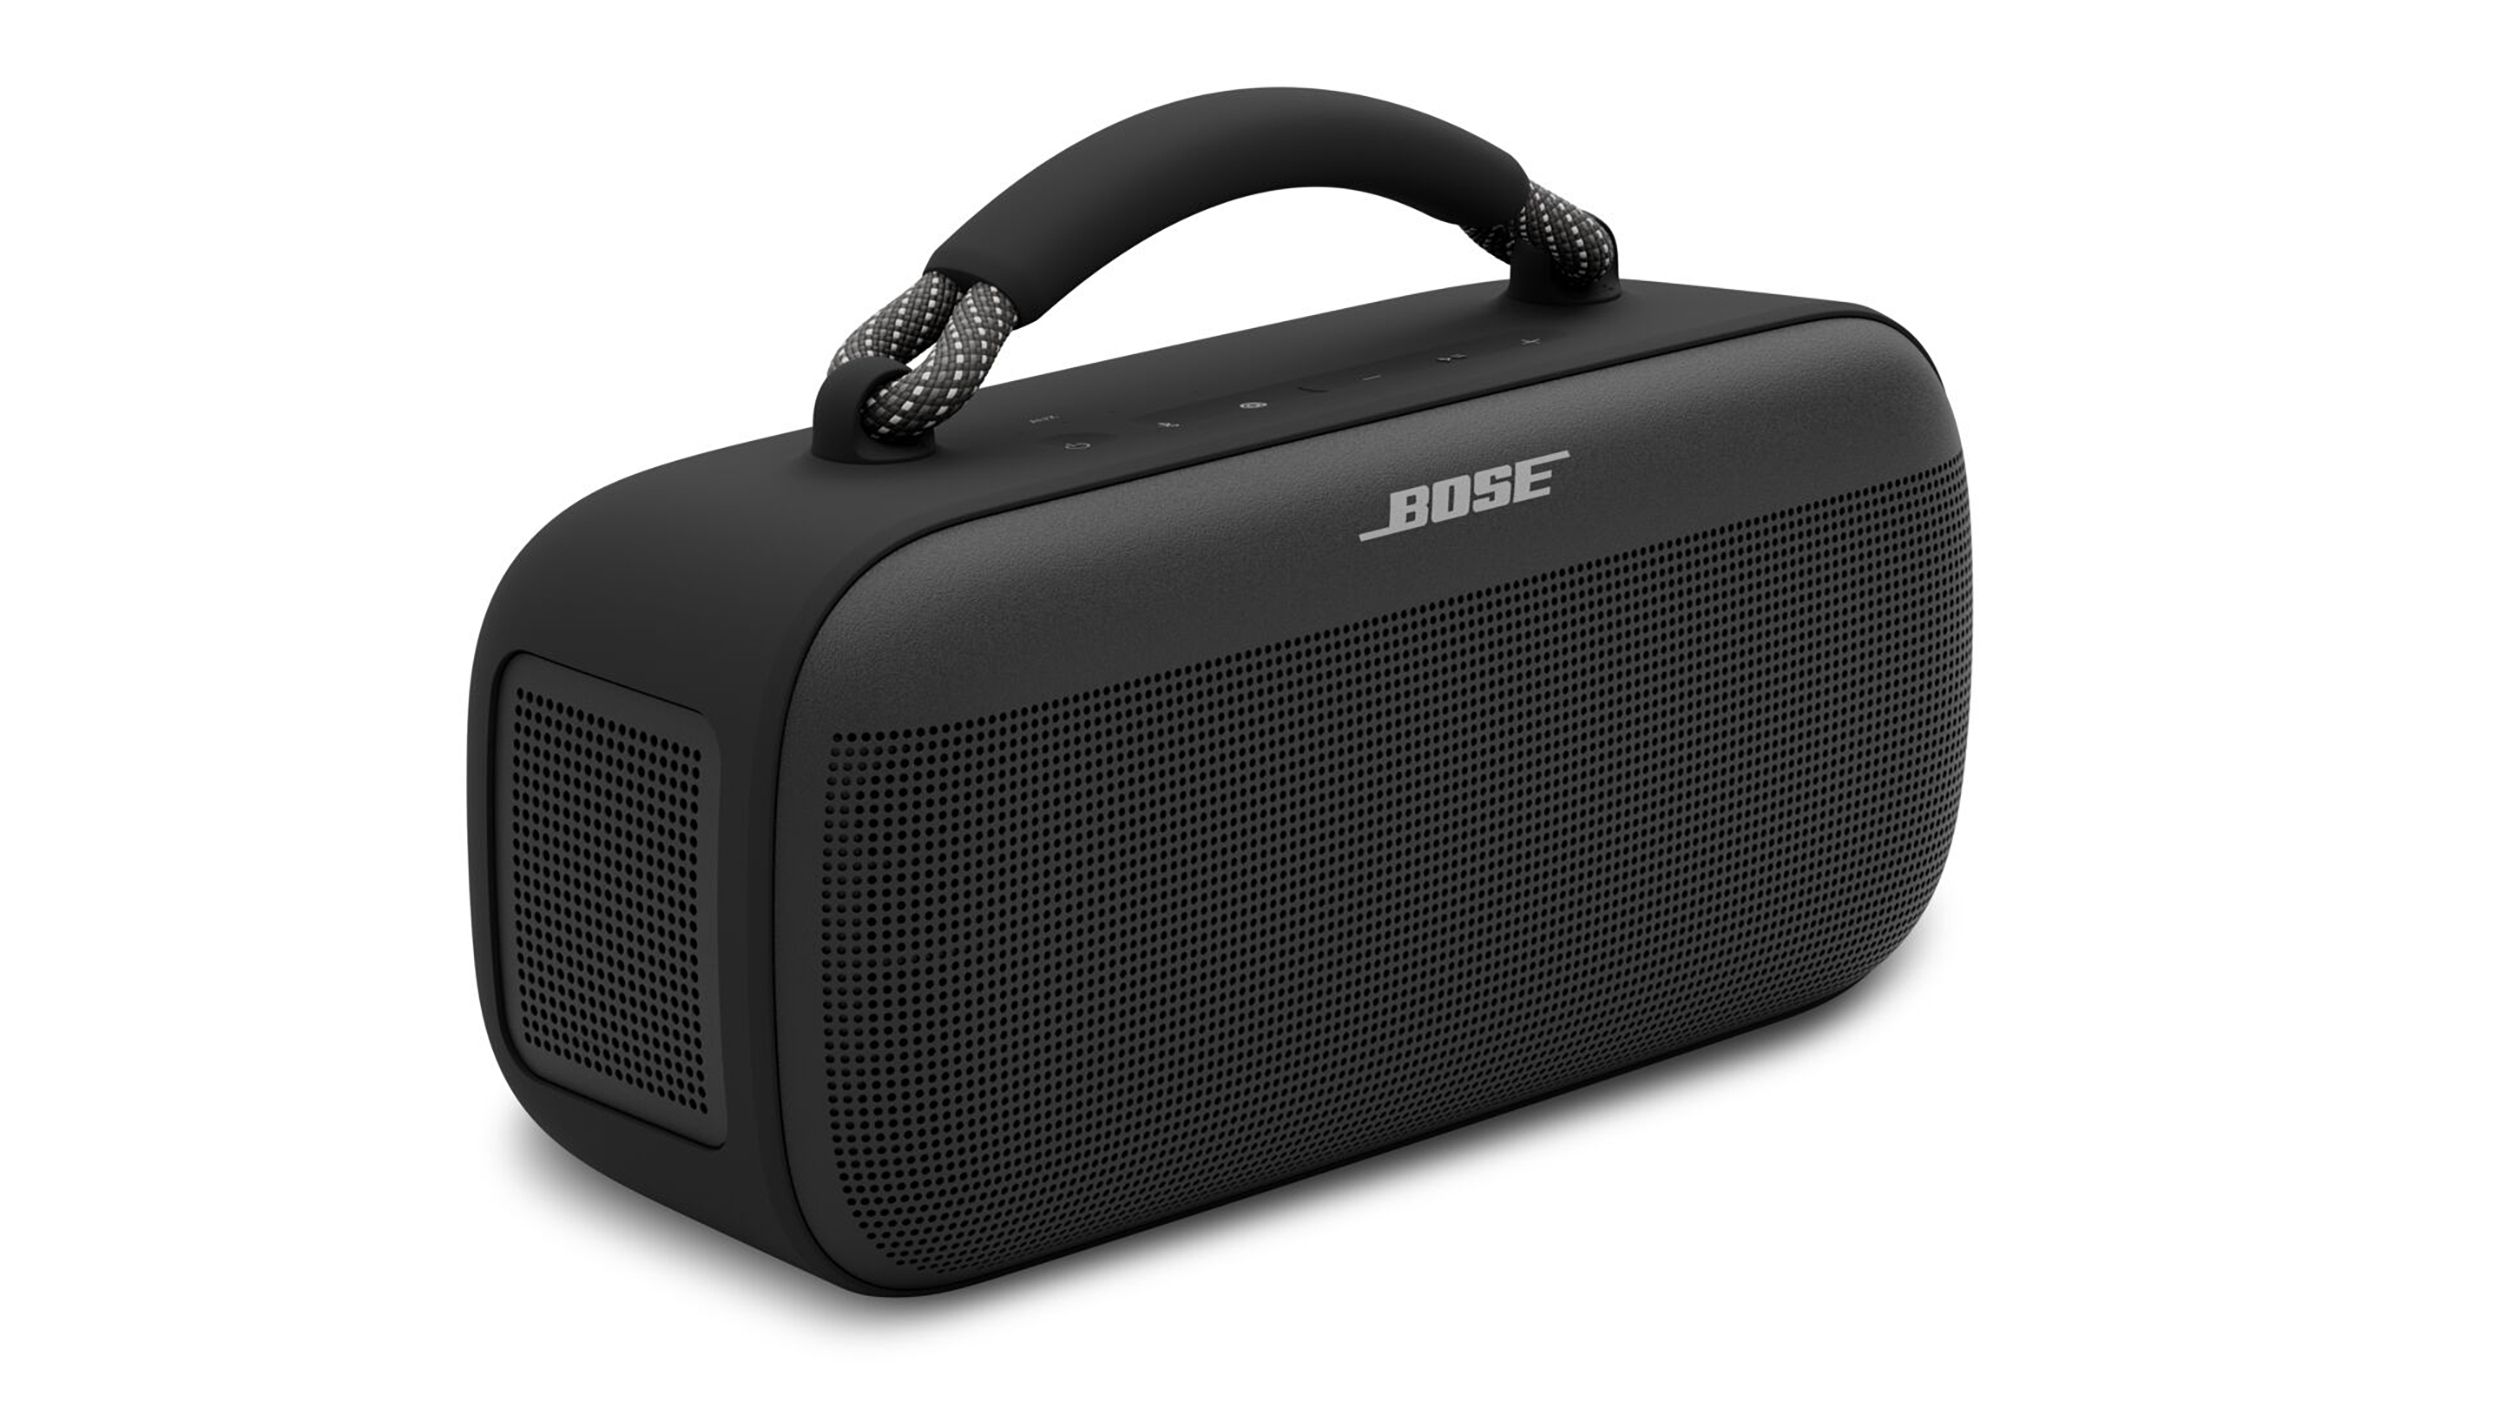 The black Bose SoundLink Max speaker against a white background.